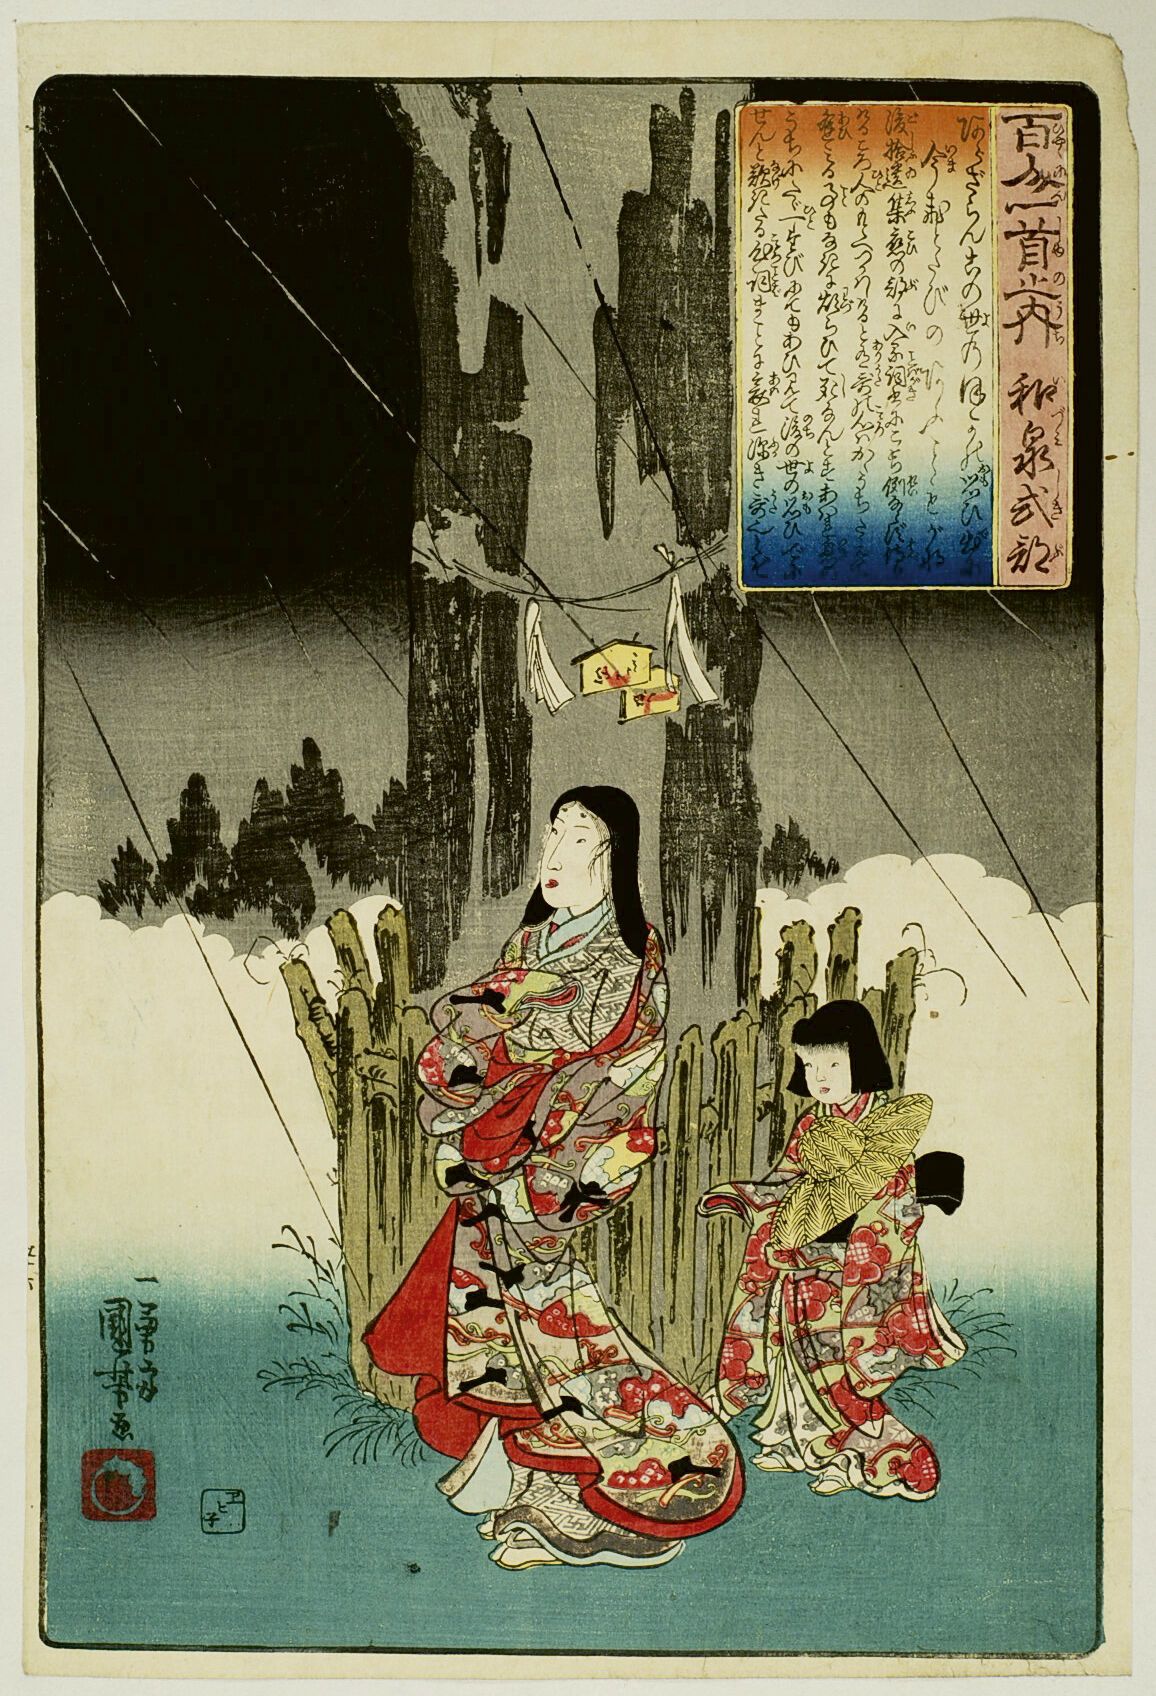 Null 宇多川国芳 (1797-1861)
百人一首》系列中的 "Oban tate-e"，板块为Izumi-shikibu，女诗人和她的女仆在雨中经过一棵大&hellip;